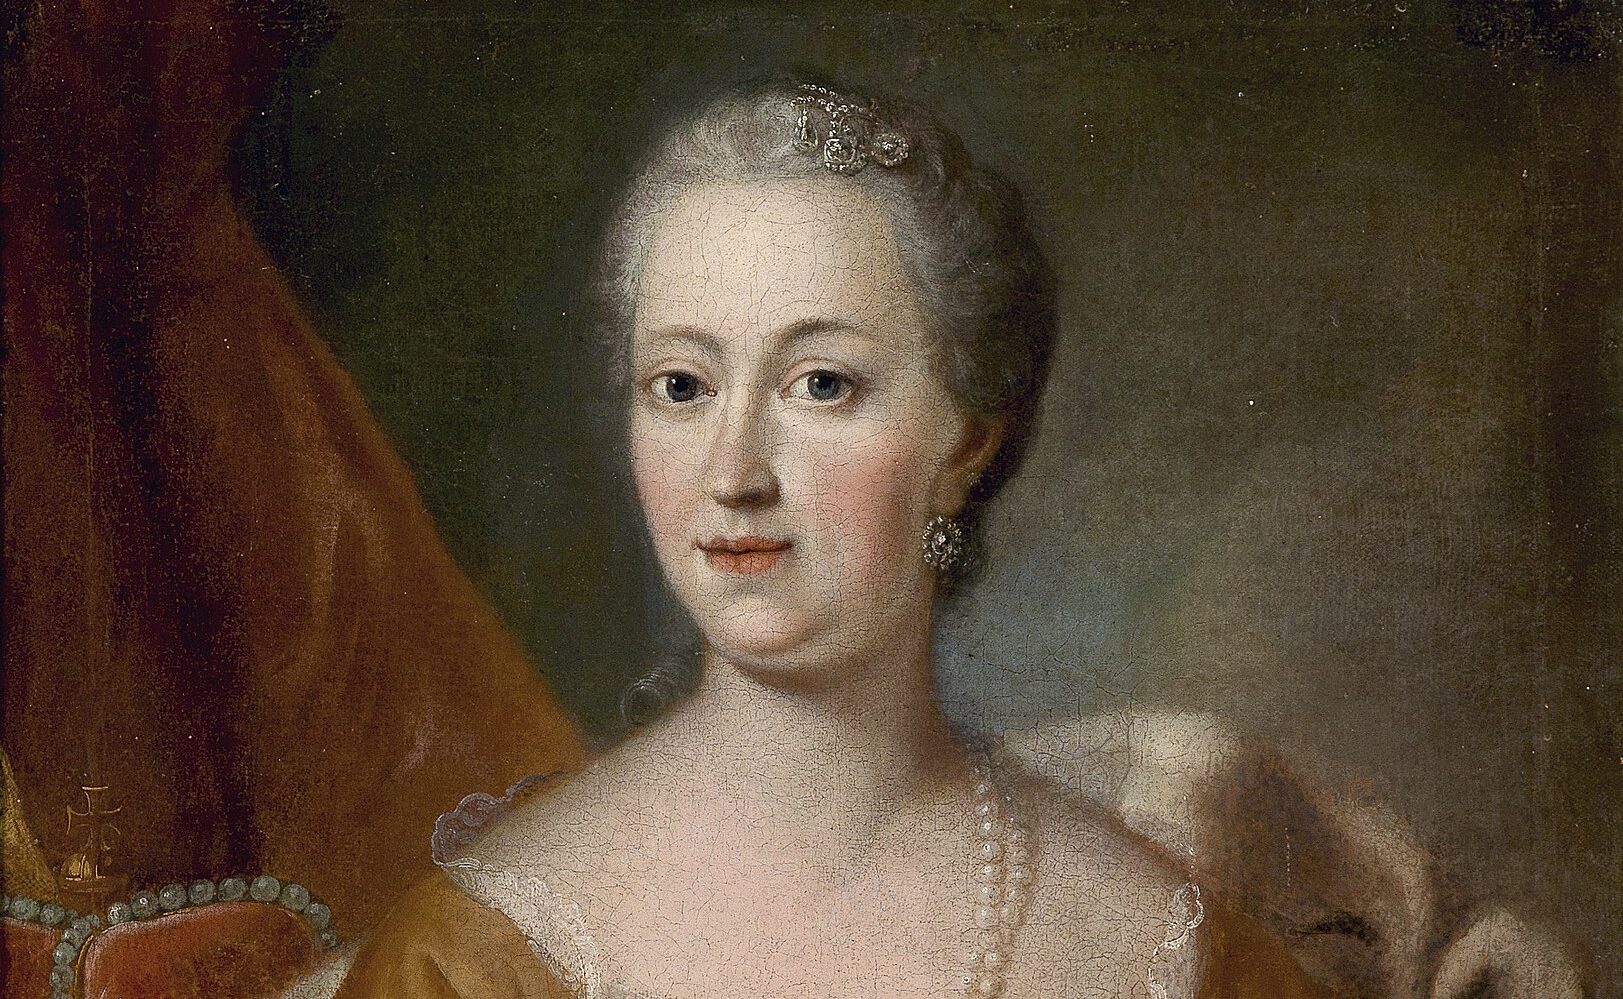 Maria Theresia von Paradis: brillante compositora y pianista